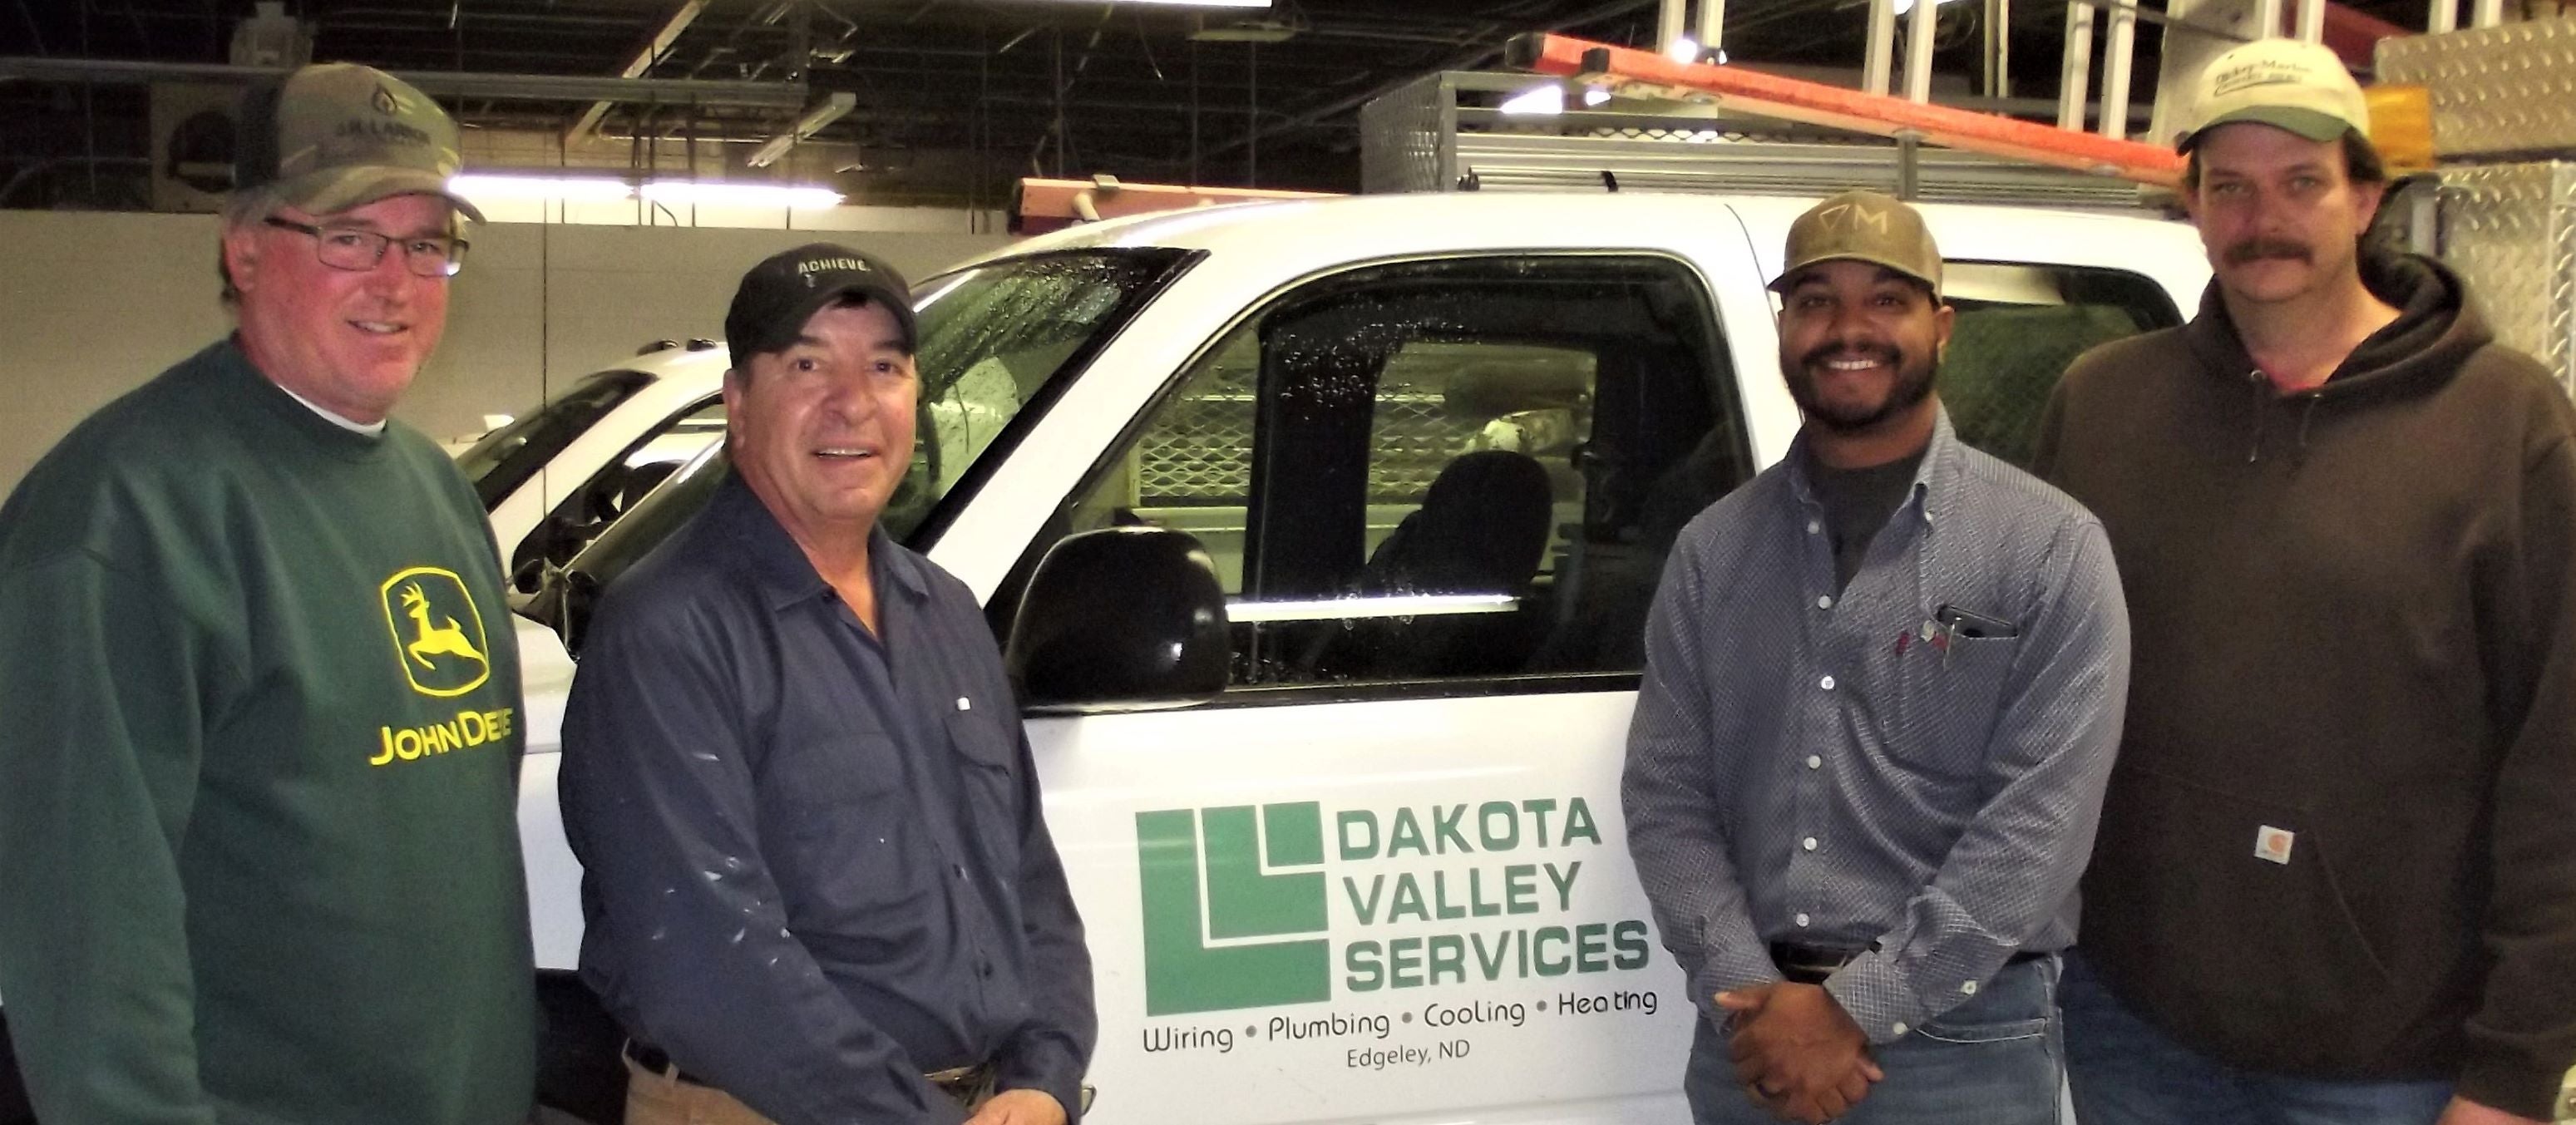 Dakota Valley Services Corporation